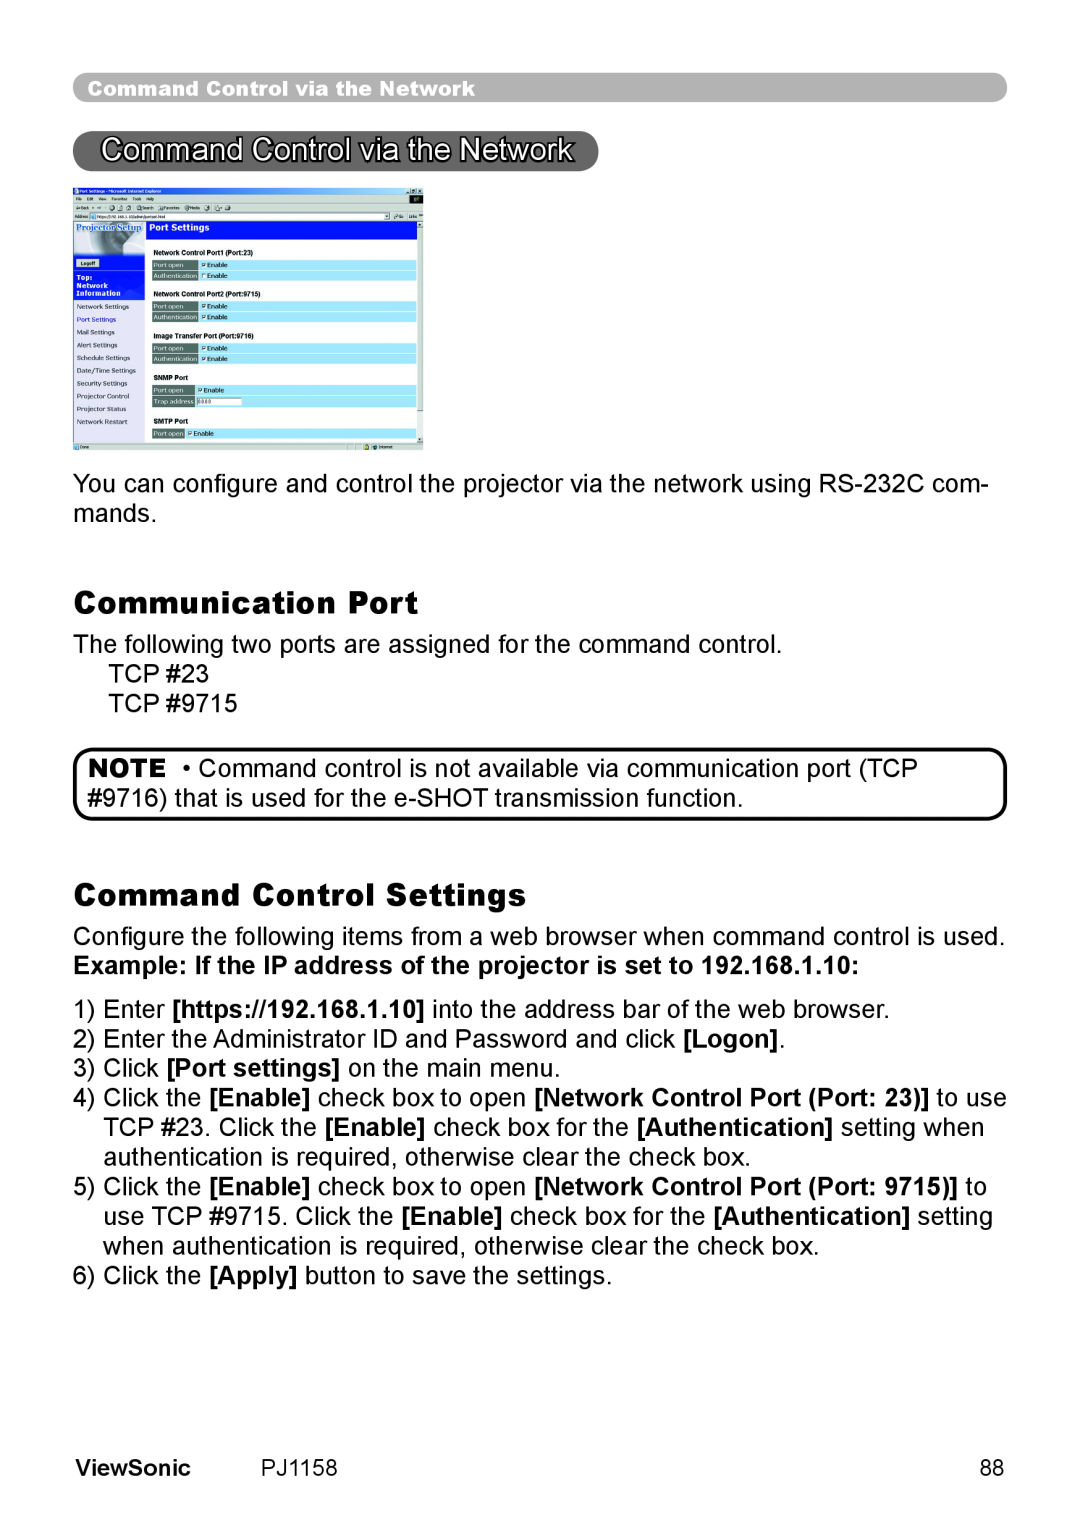 ViewSonic PJ1158 manual Command Controlvia the Network, Command Control Settings, Communication Port 